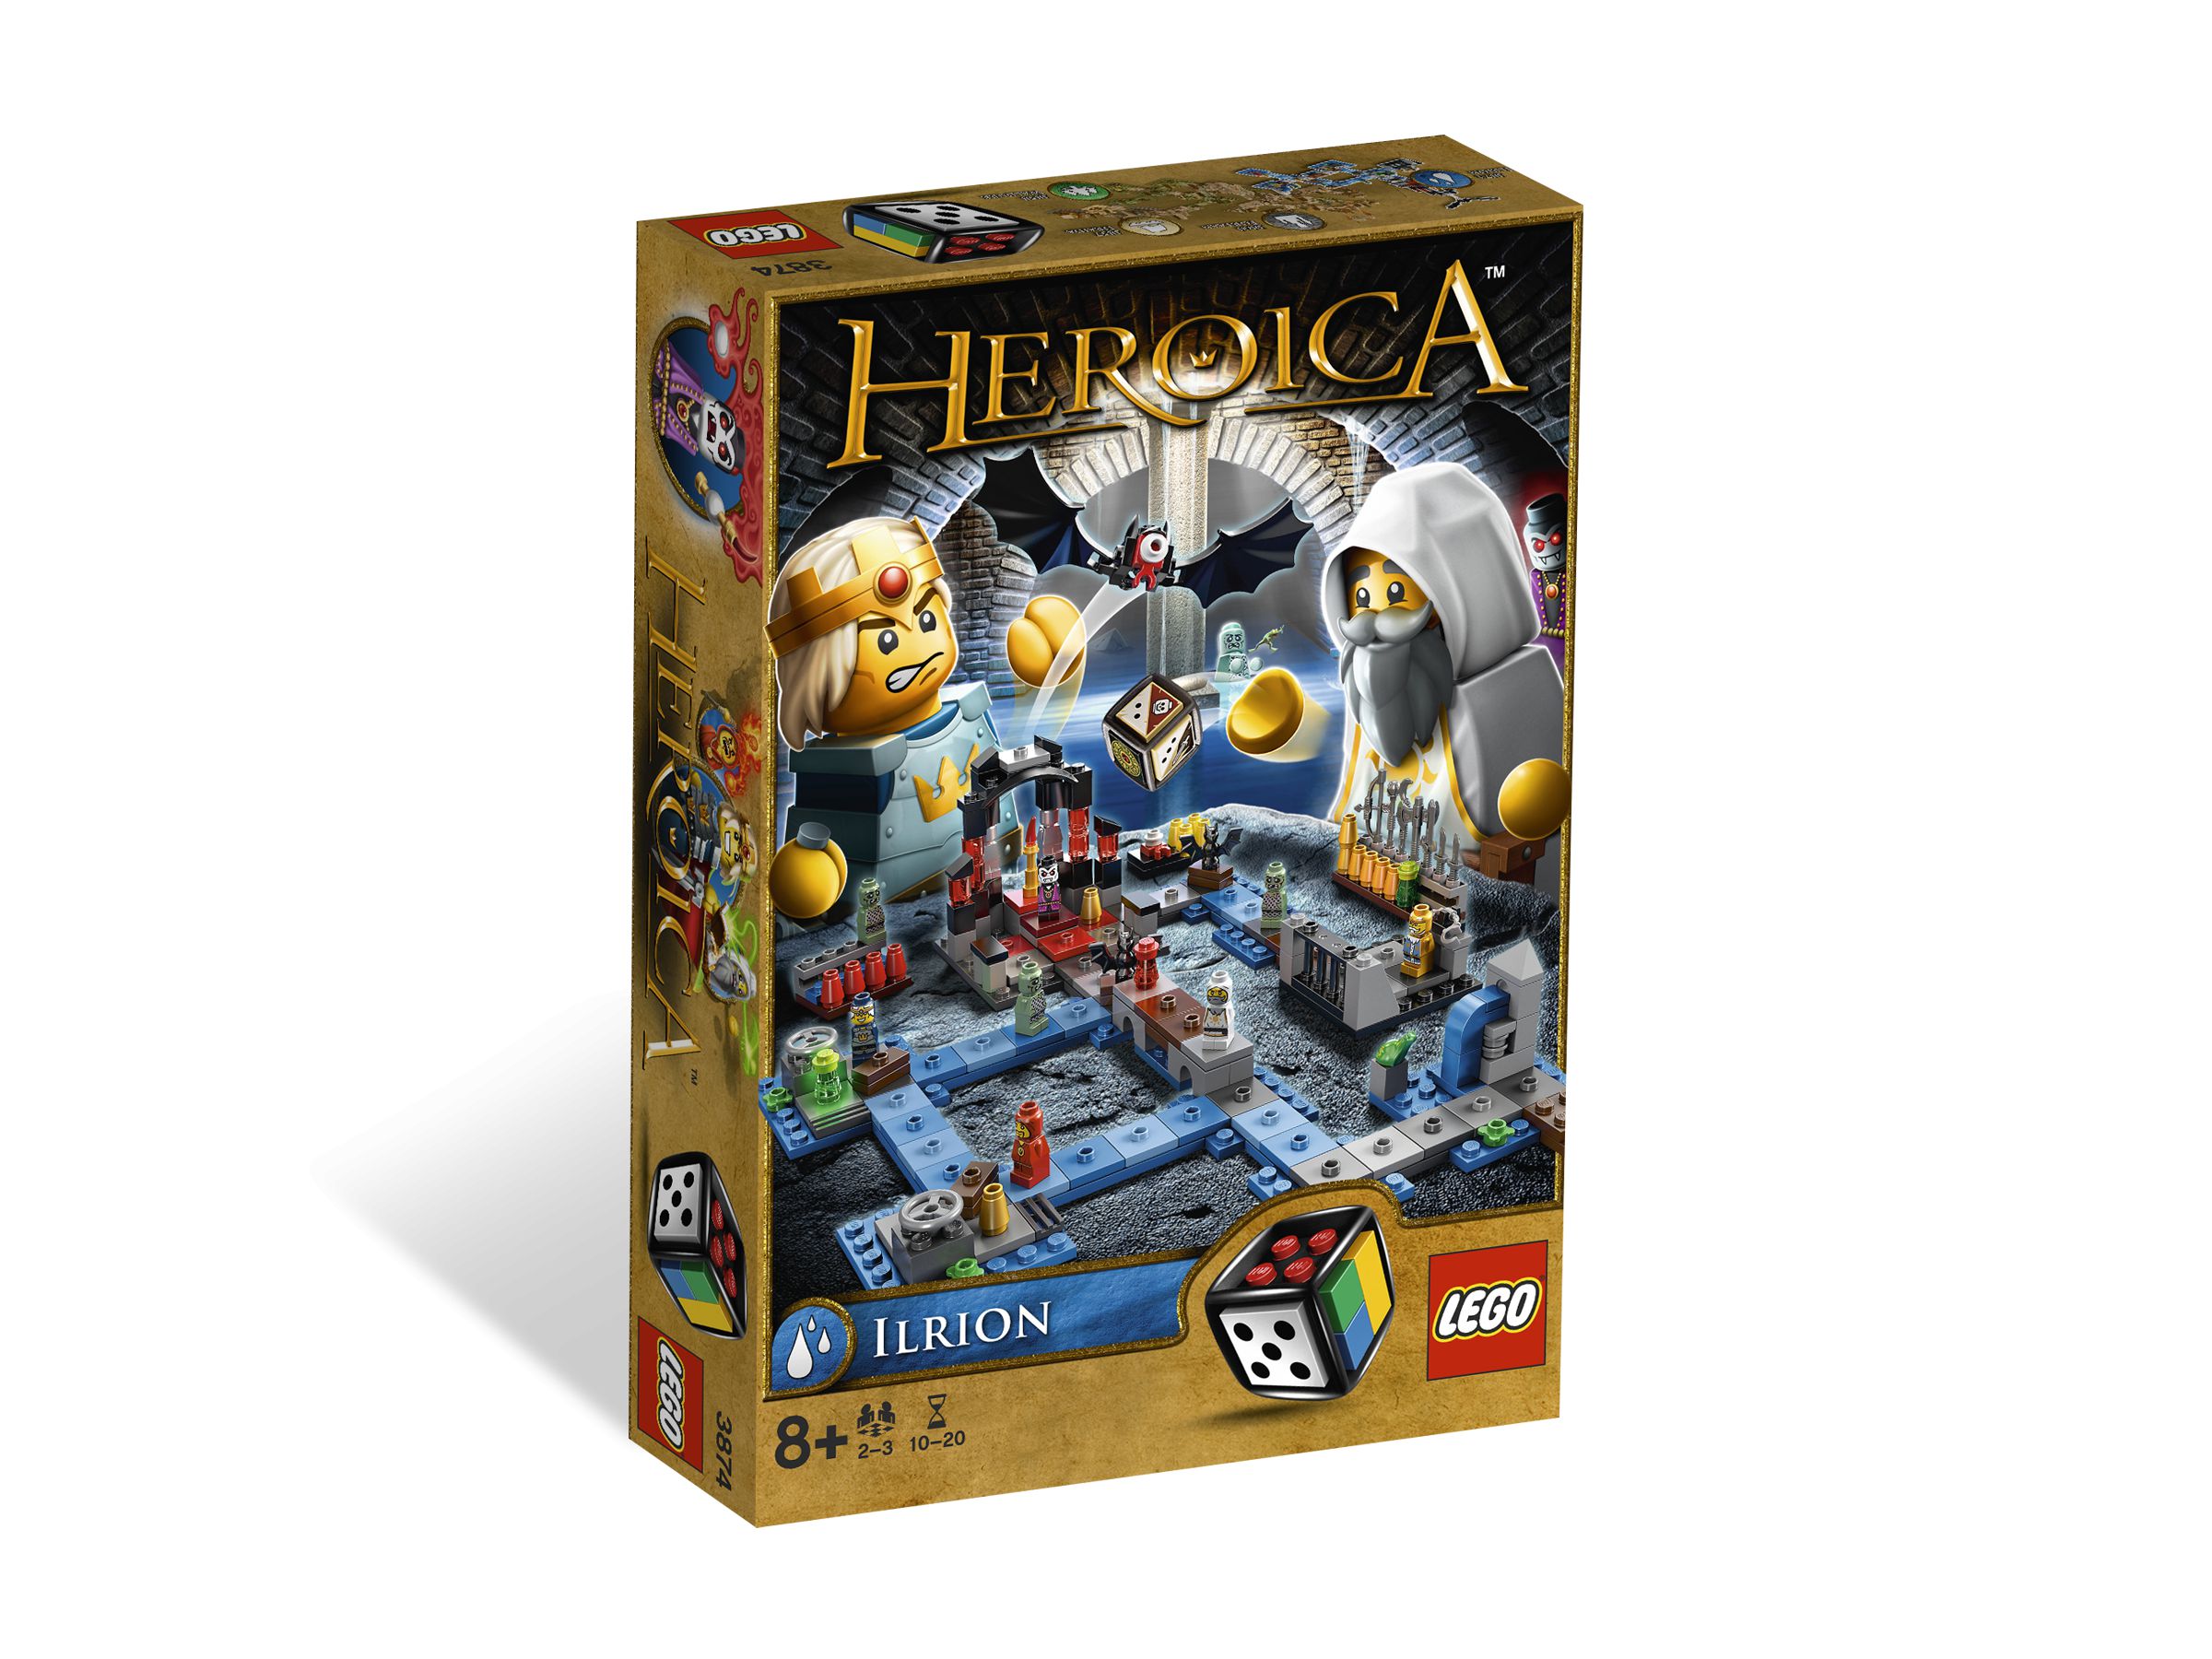 LEGO Games 3874 HEROICA Ilrion LEGO_3874.jpg